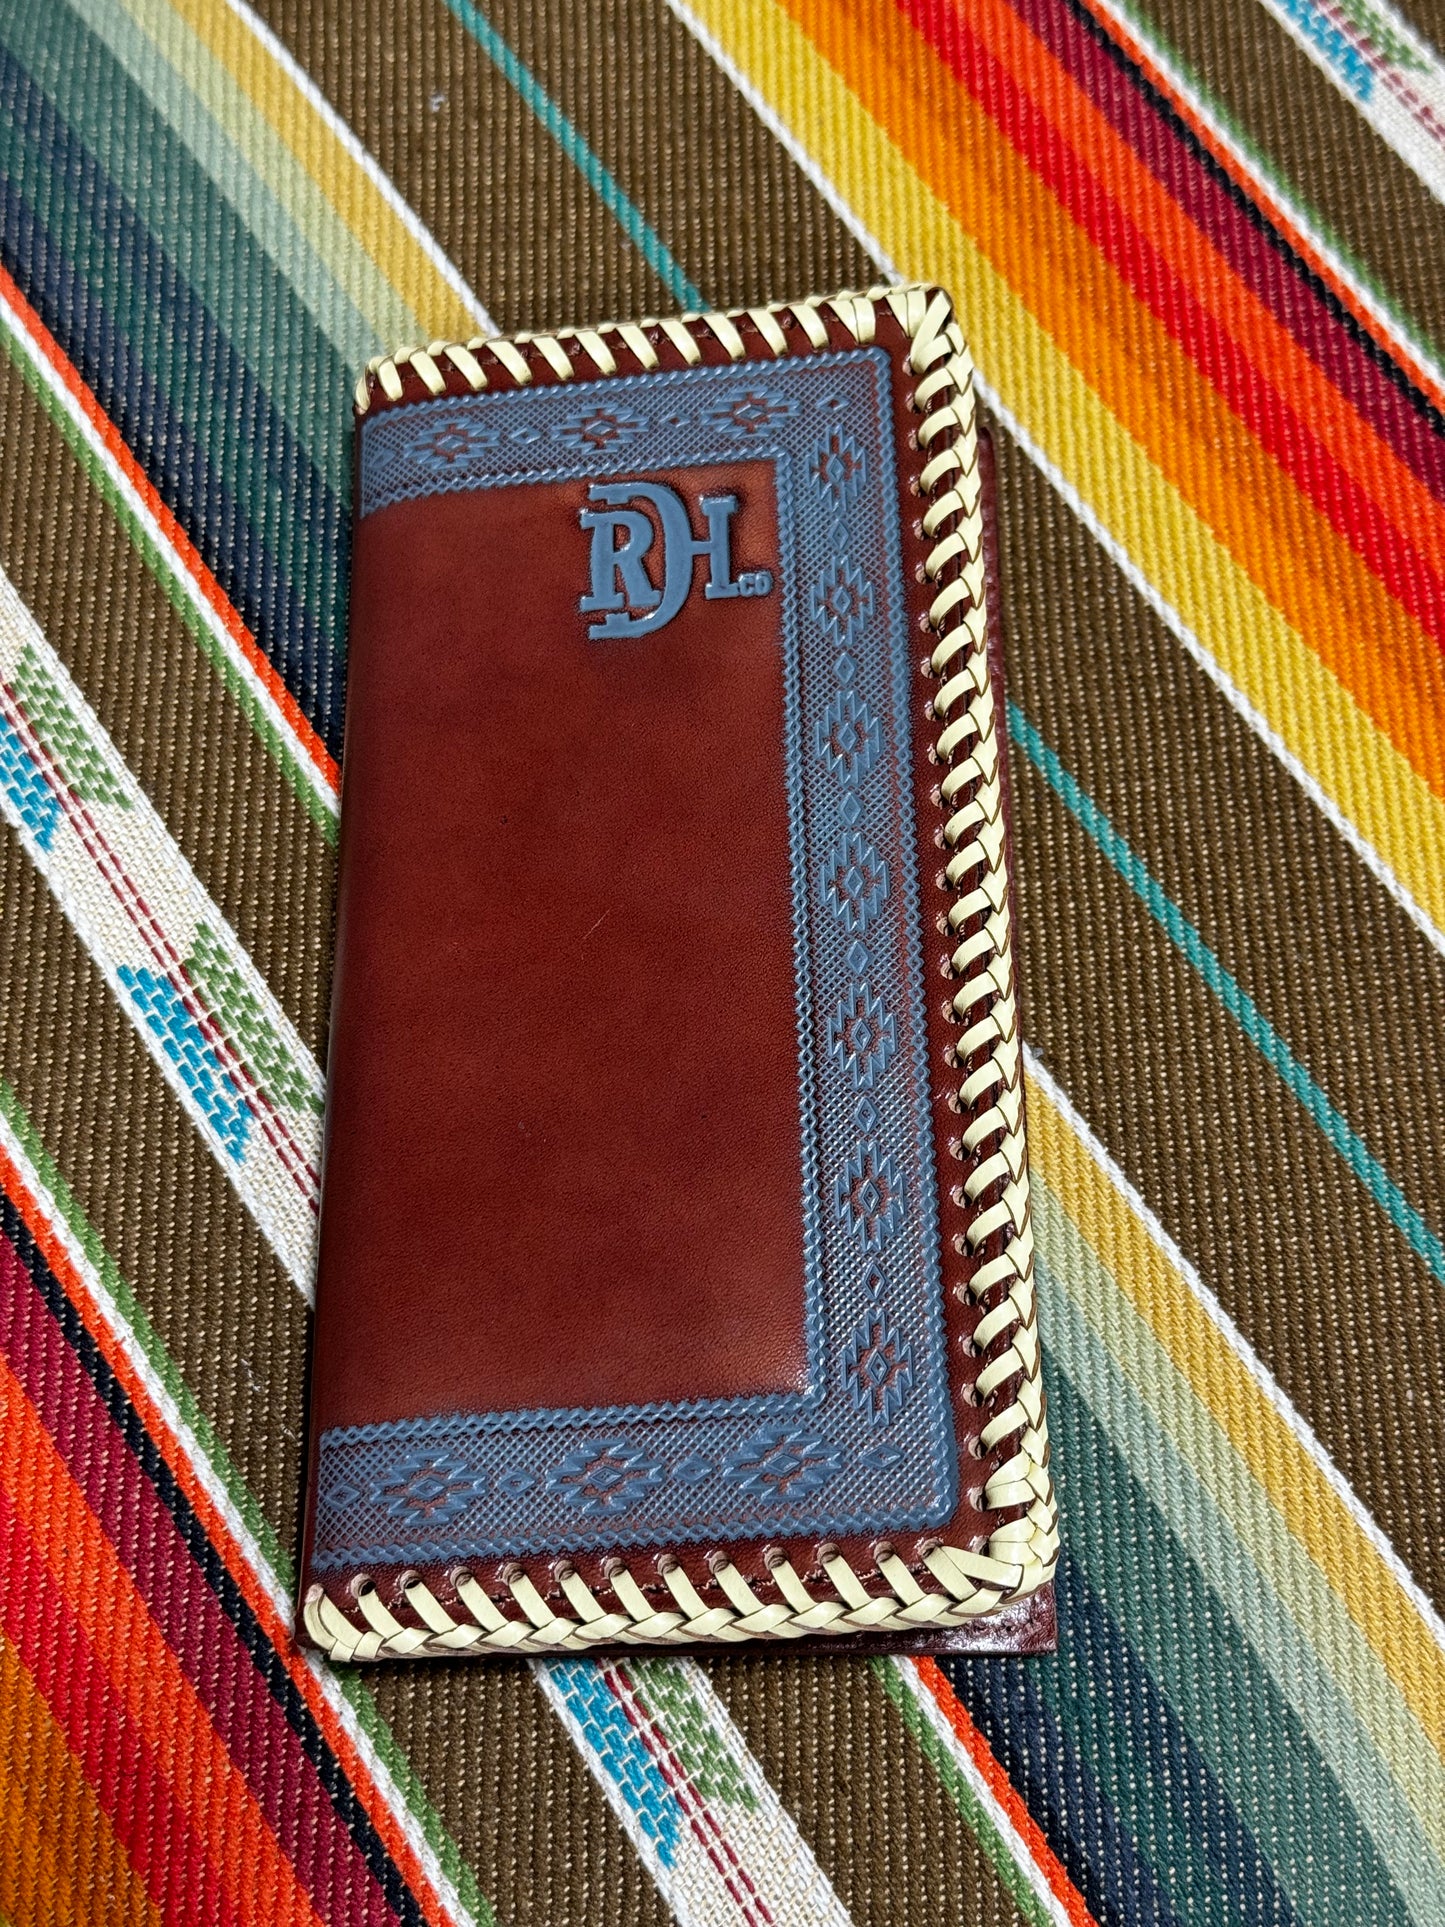 Red Dirt Hat Blue Aztec Buck Stitch Rodeo Wallet (76W4)